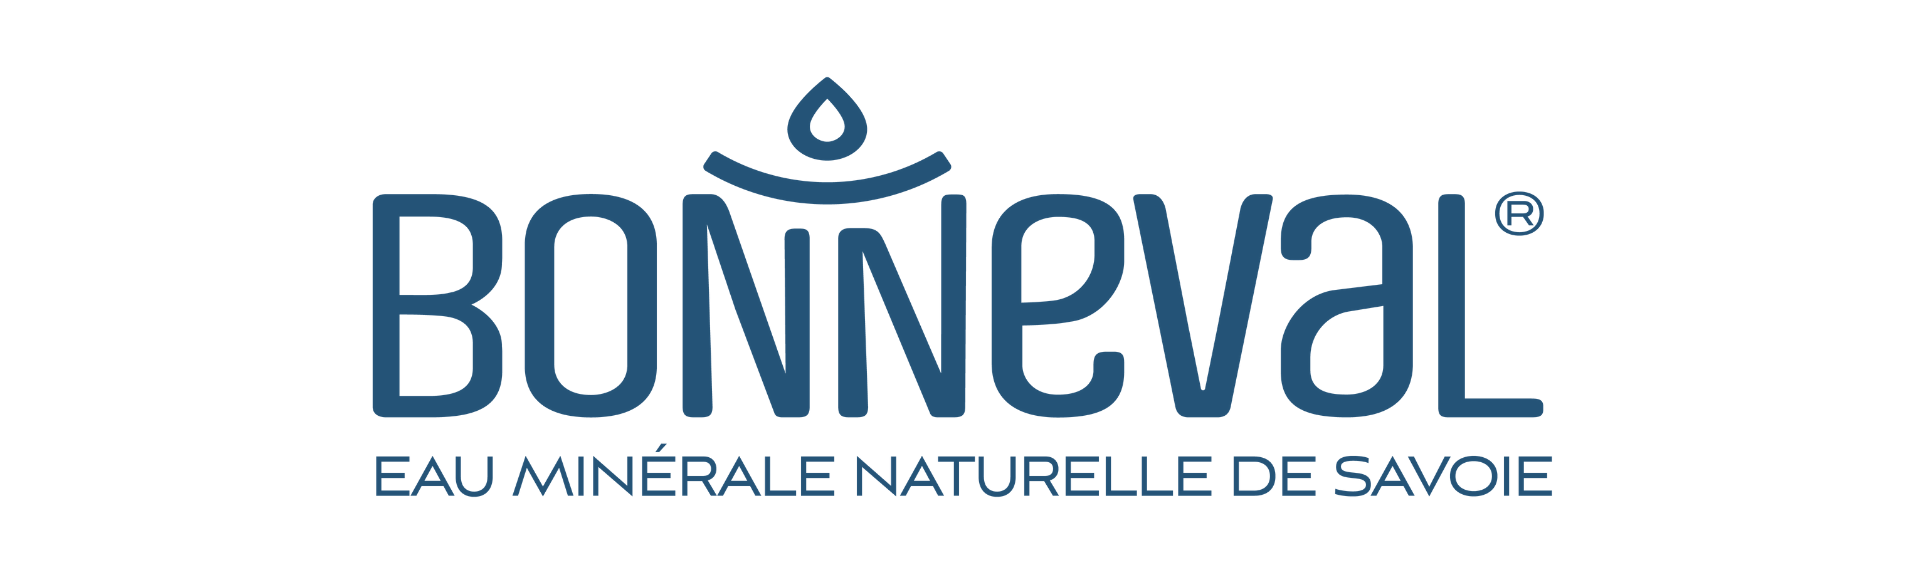 logo Bonneval ancient water